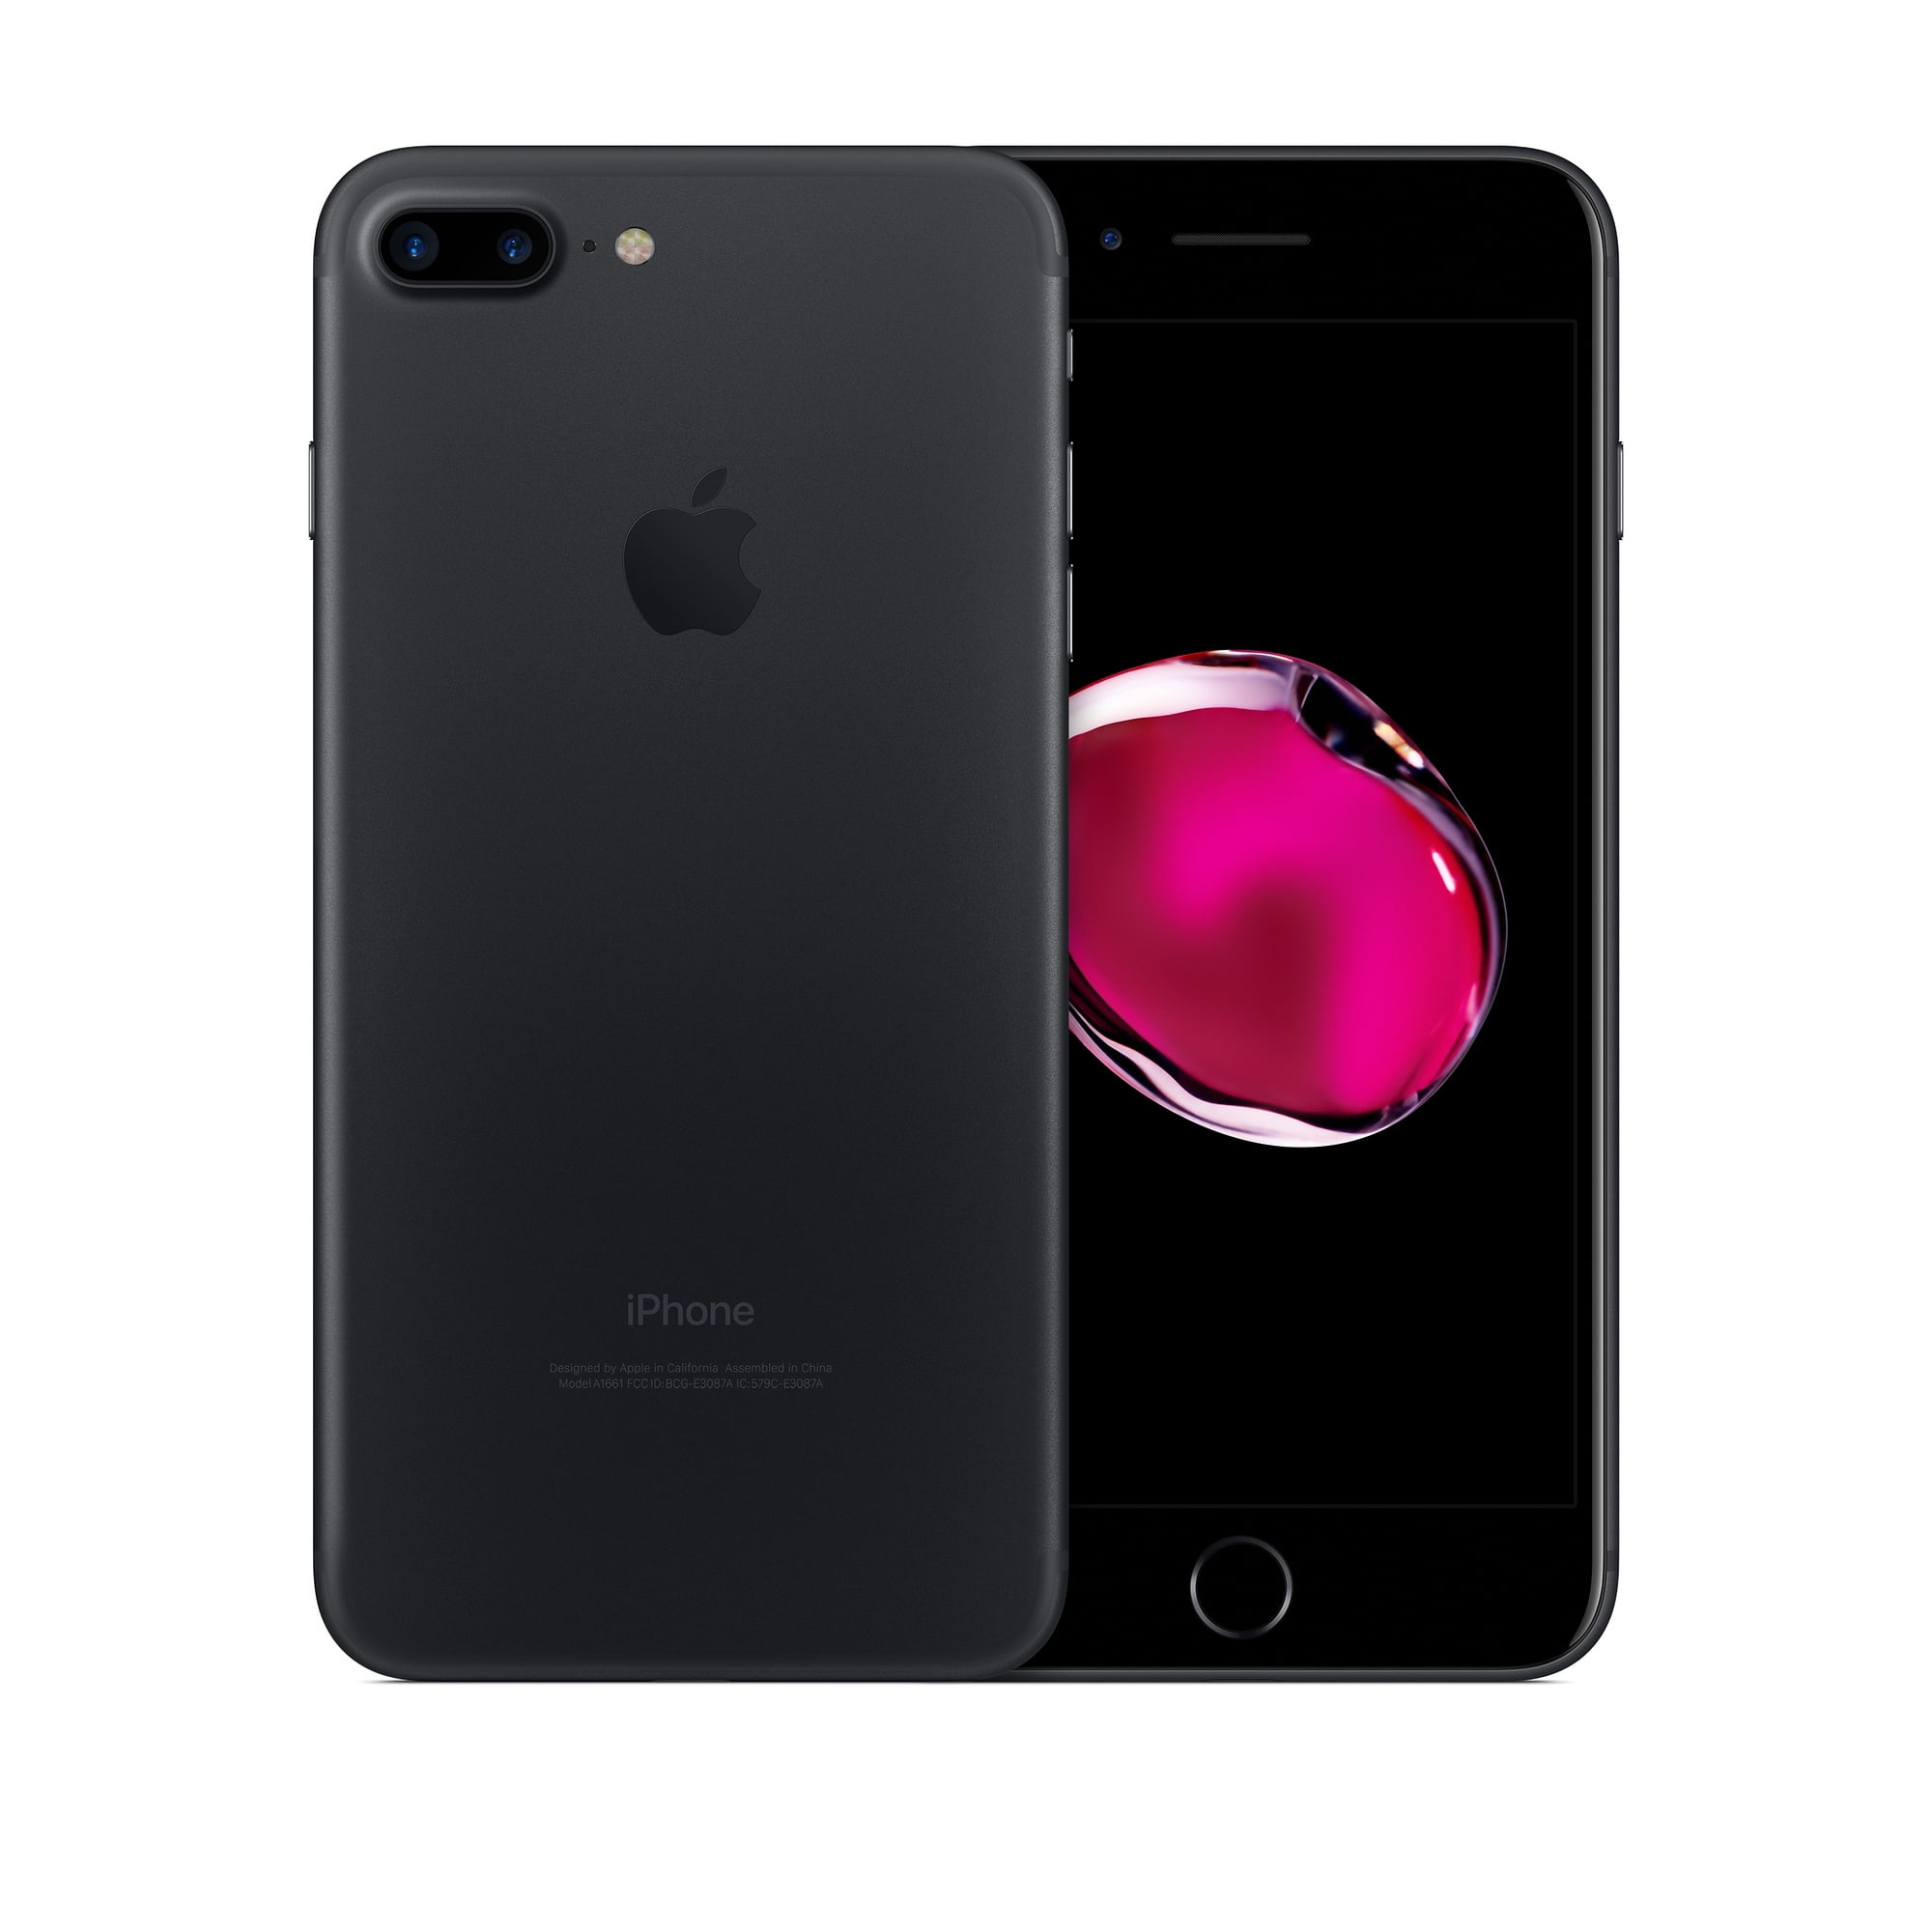 iPhone 7 Jet Black 256 GB docomo 美品 - スマートフォン本体